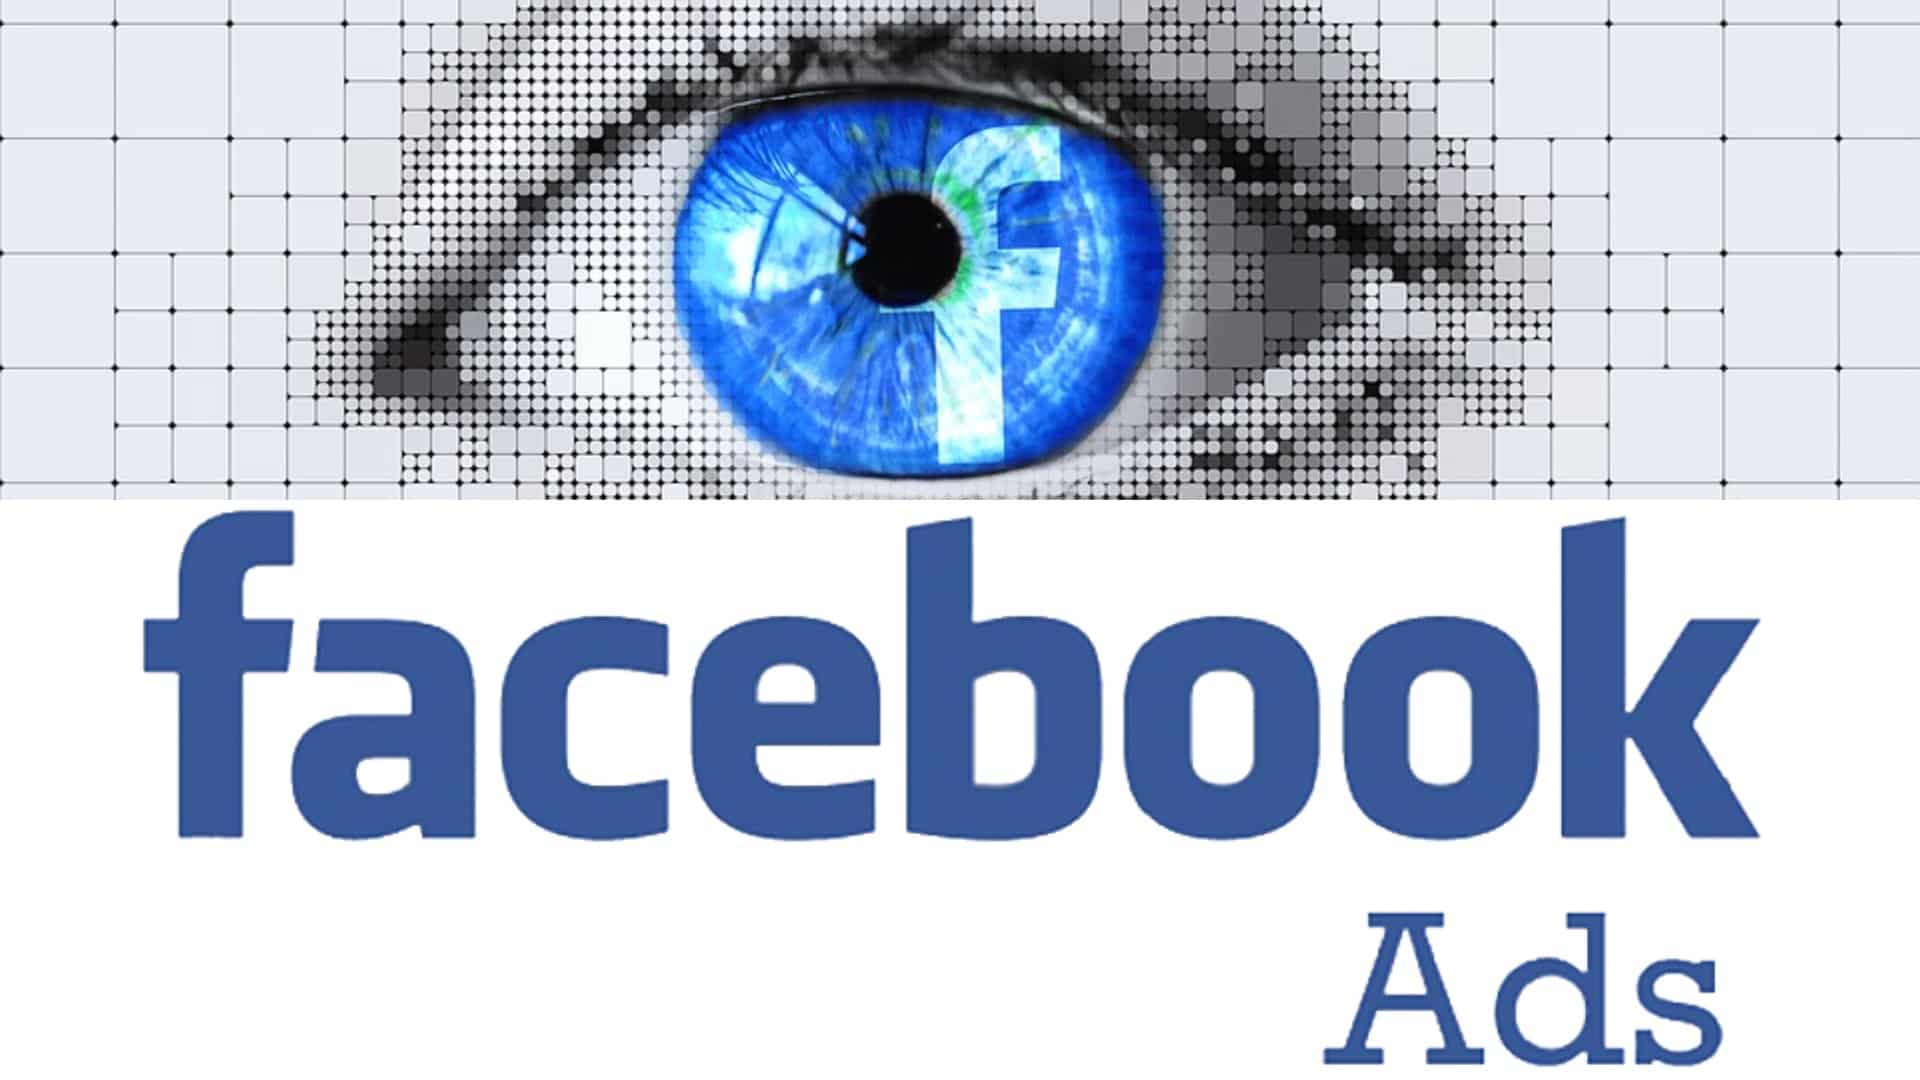 FB logo in the blue eye